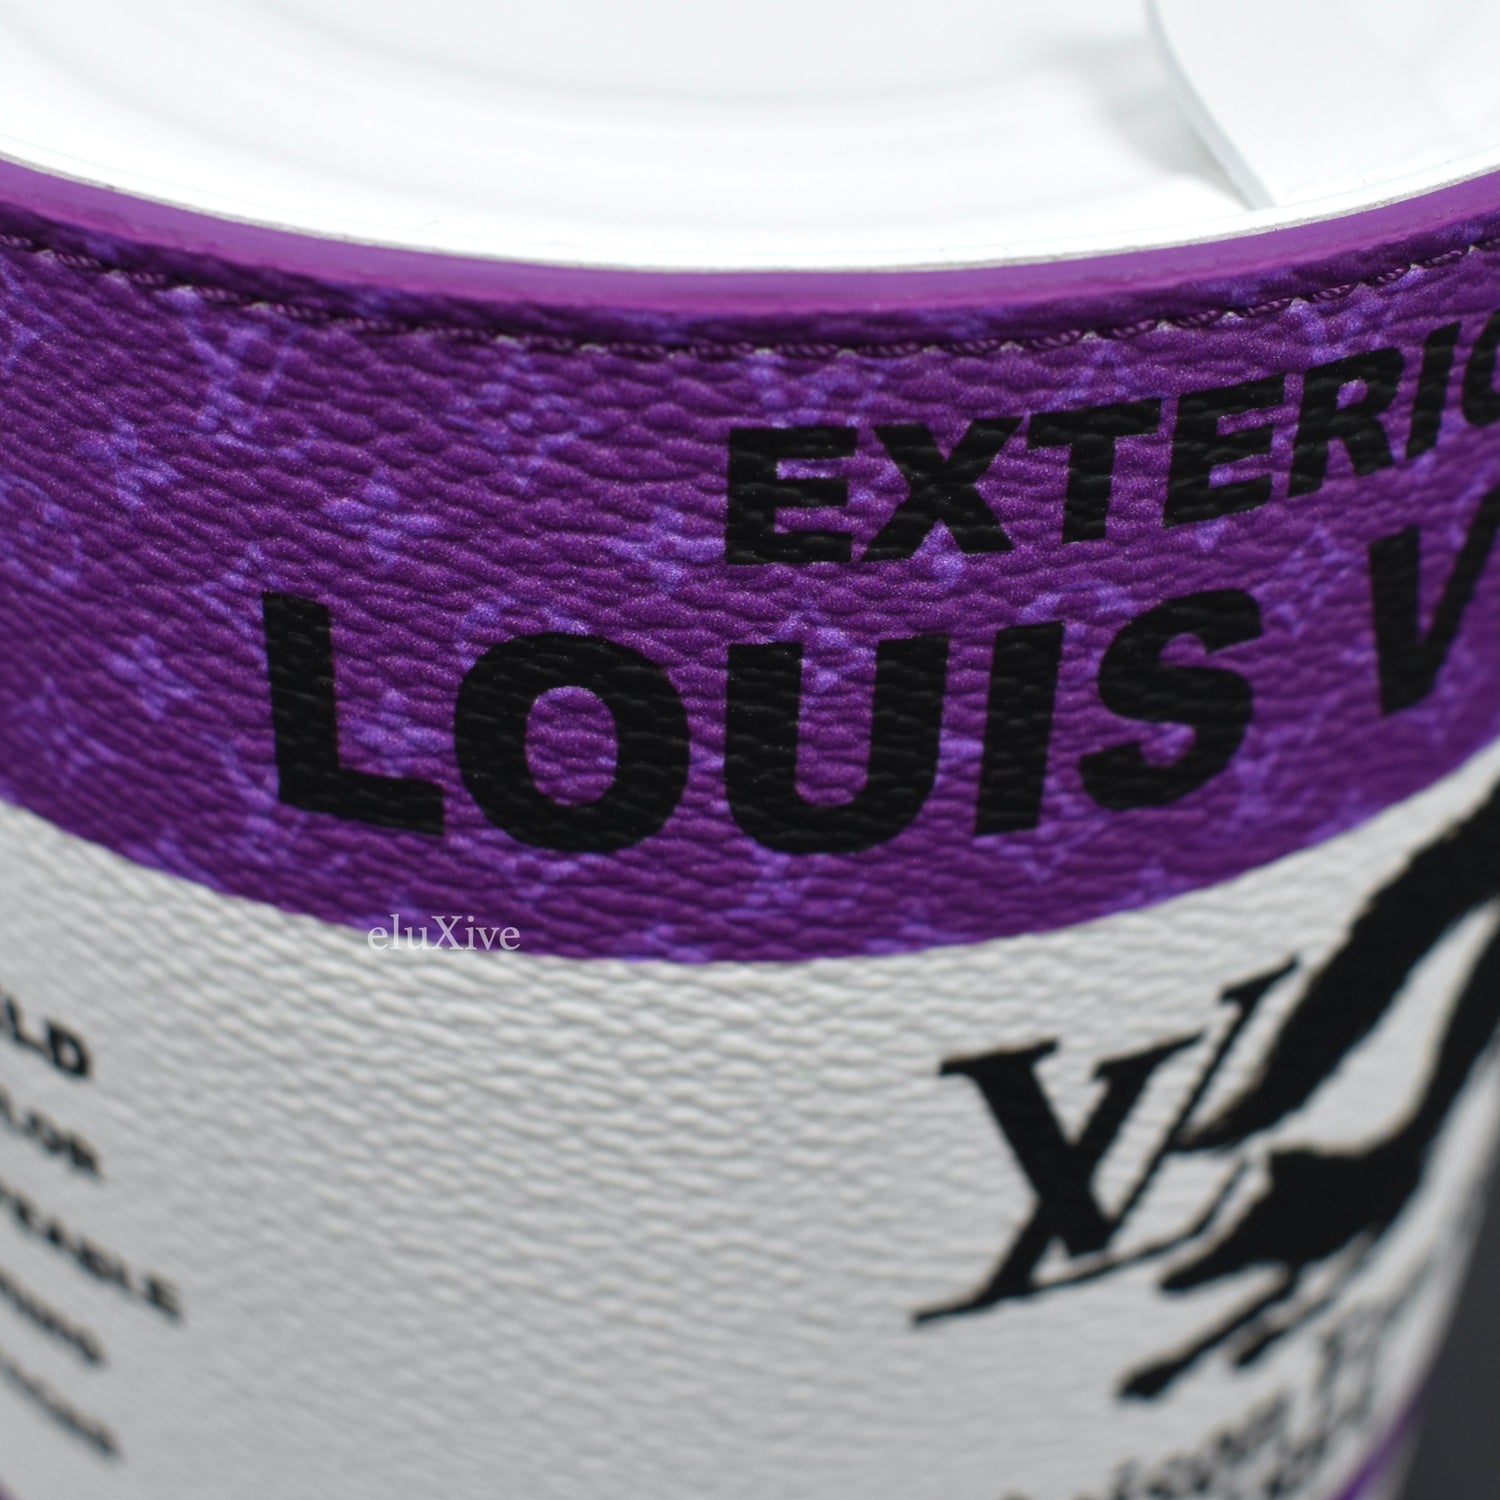 Louis Vuitton LV Paint Can Bucket Bag